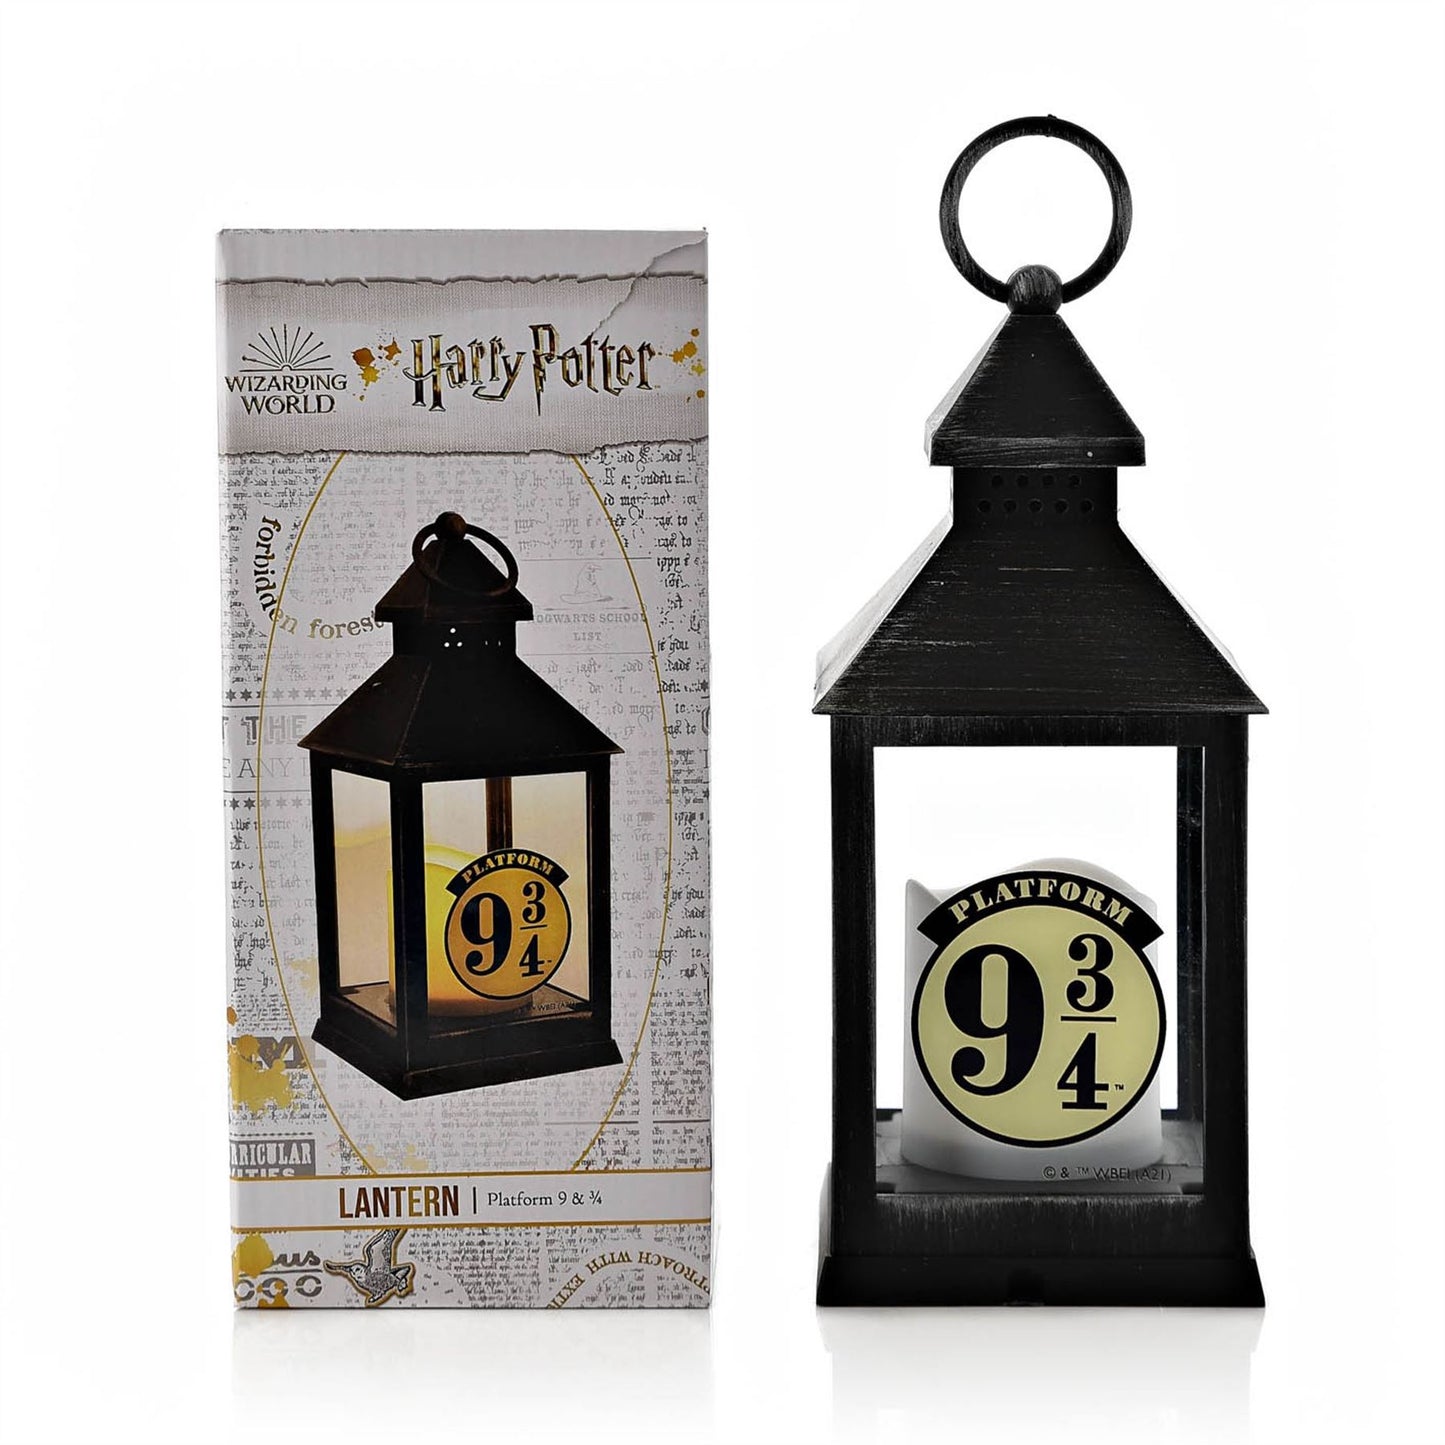 Harry Potter Light Up Lantern - Platform 9 3/4